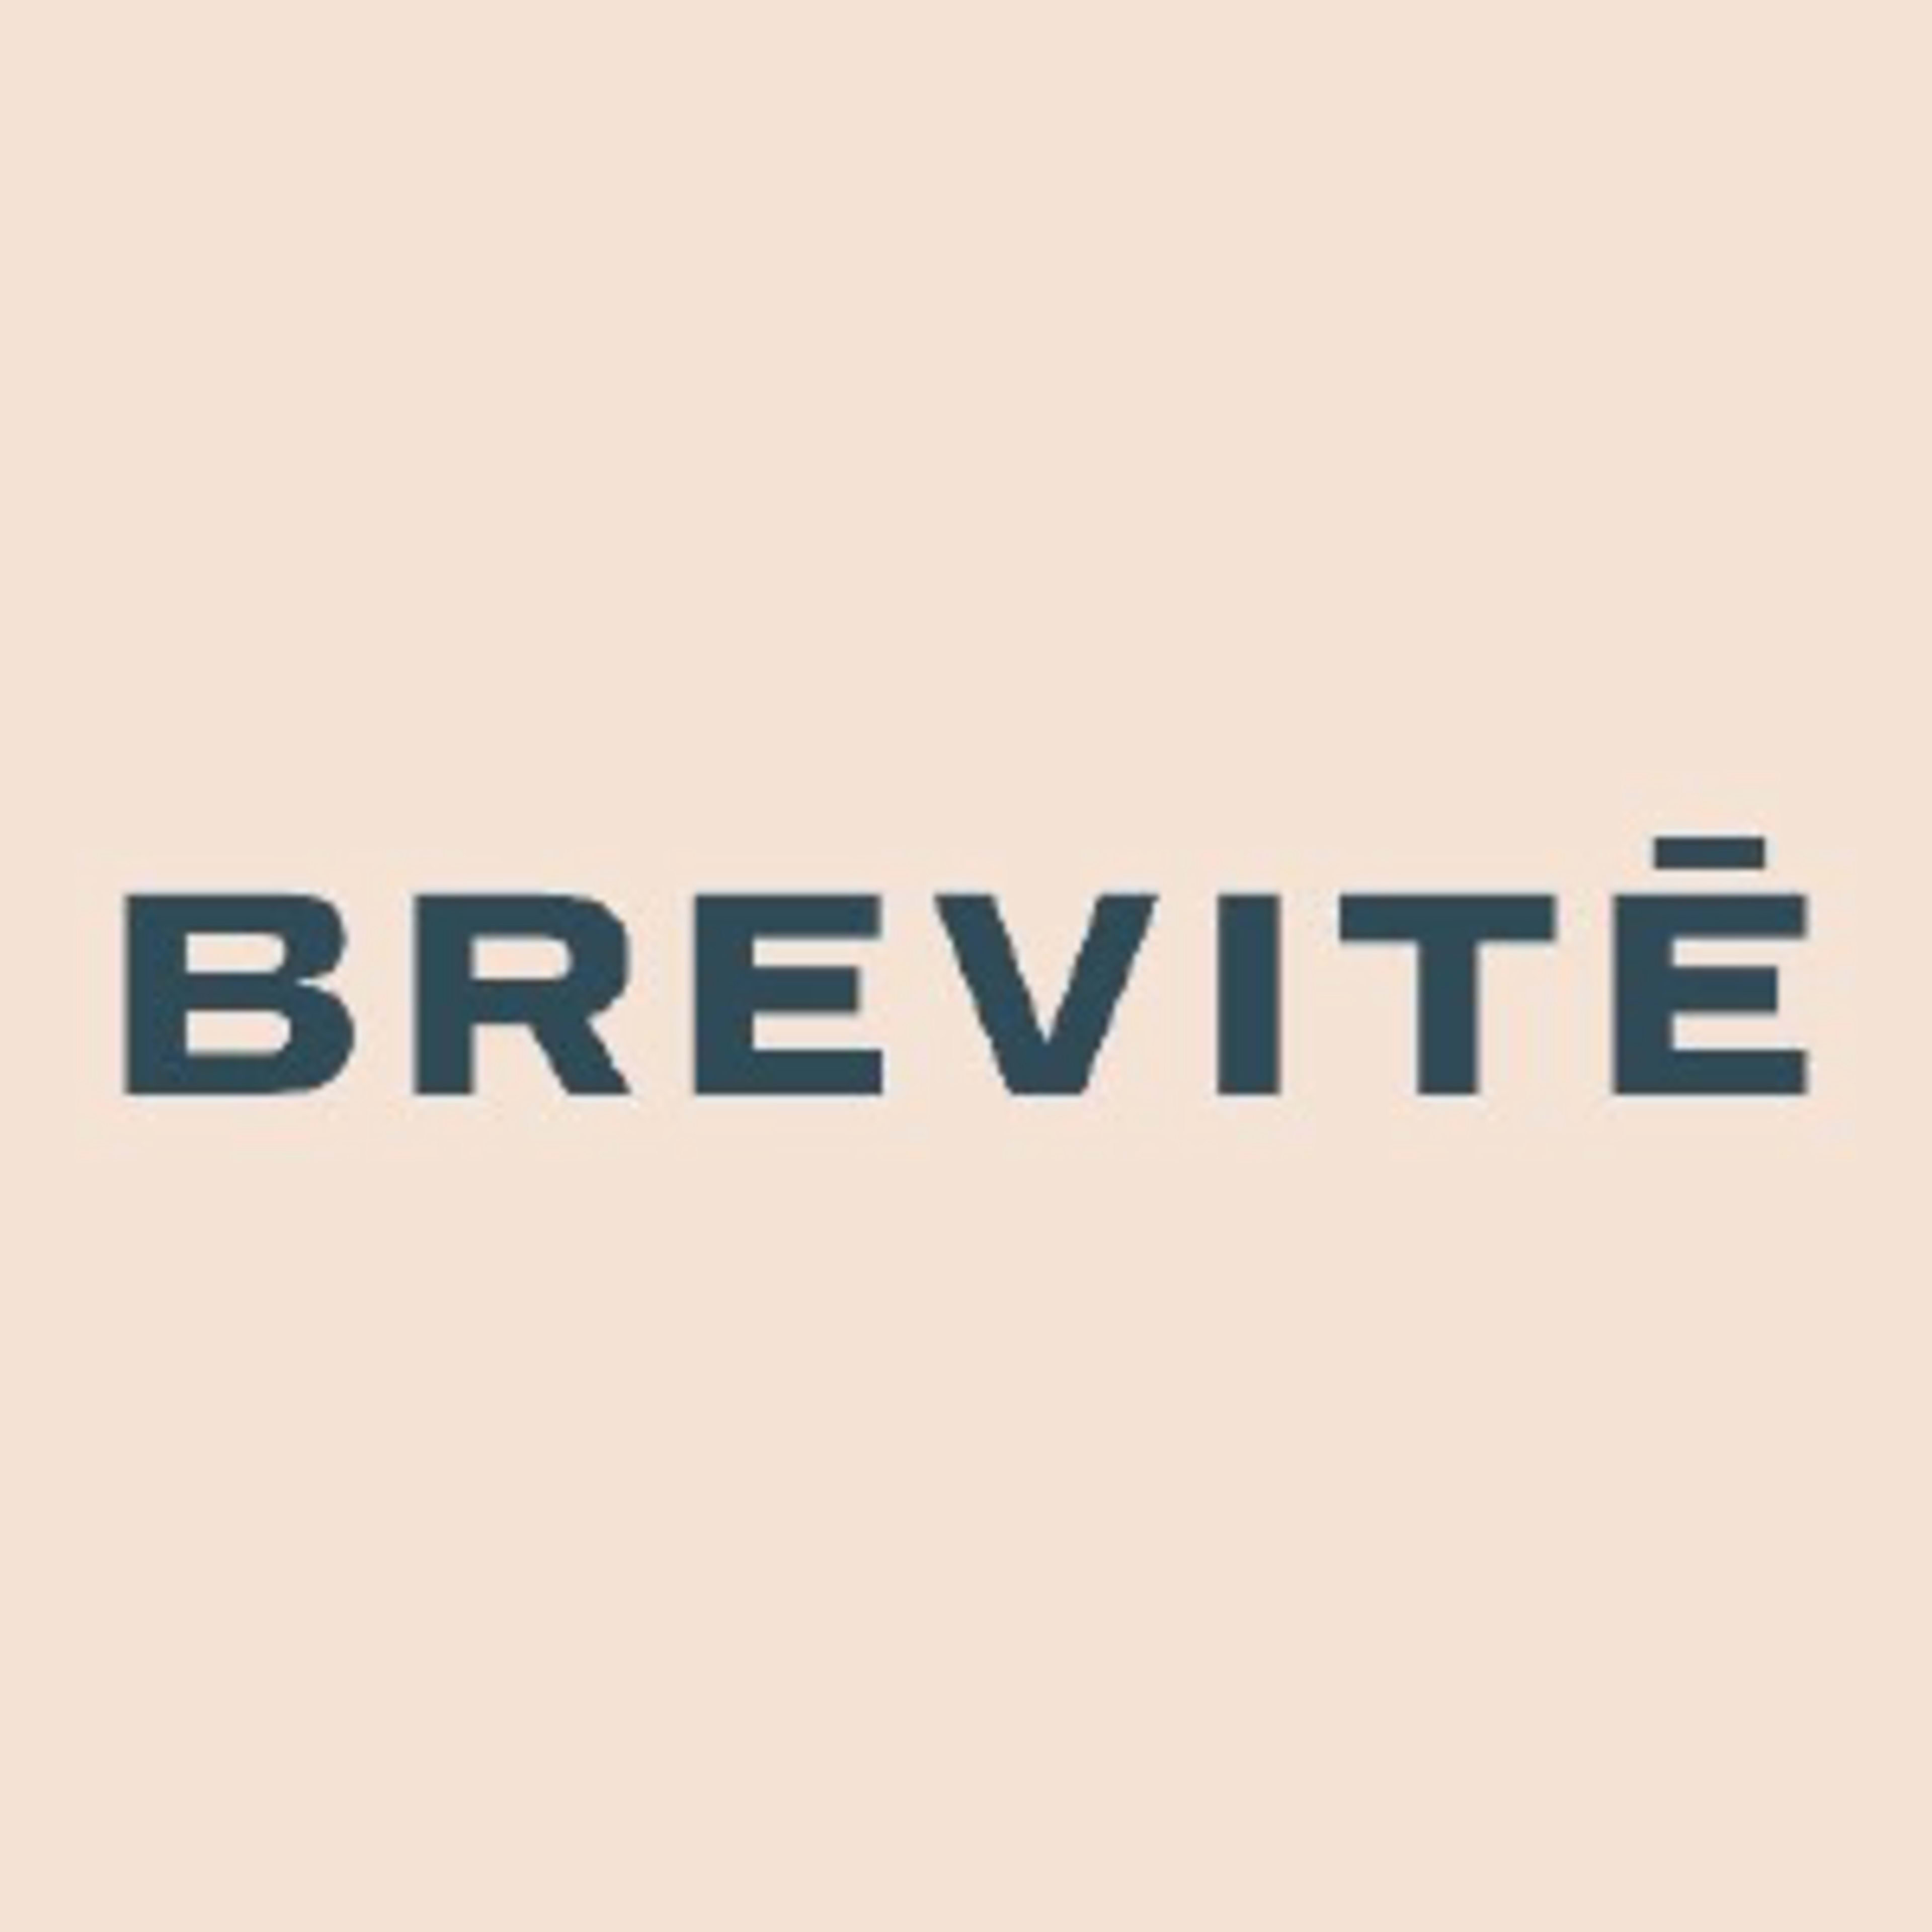 BreviteCode